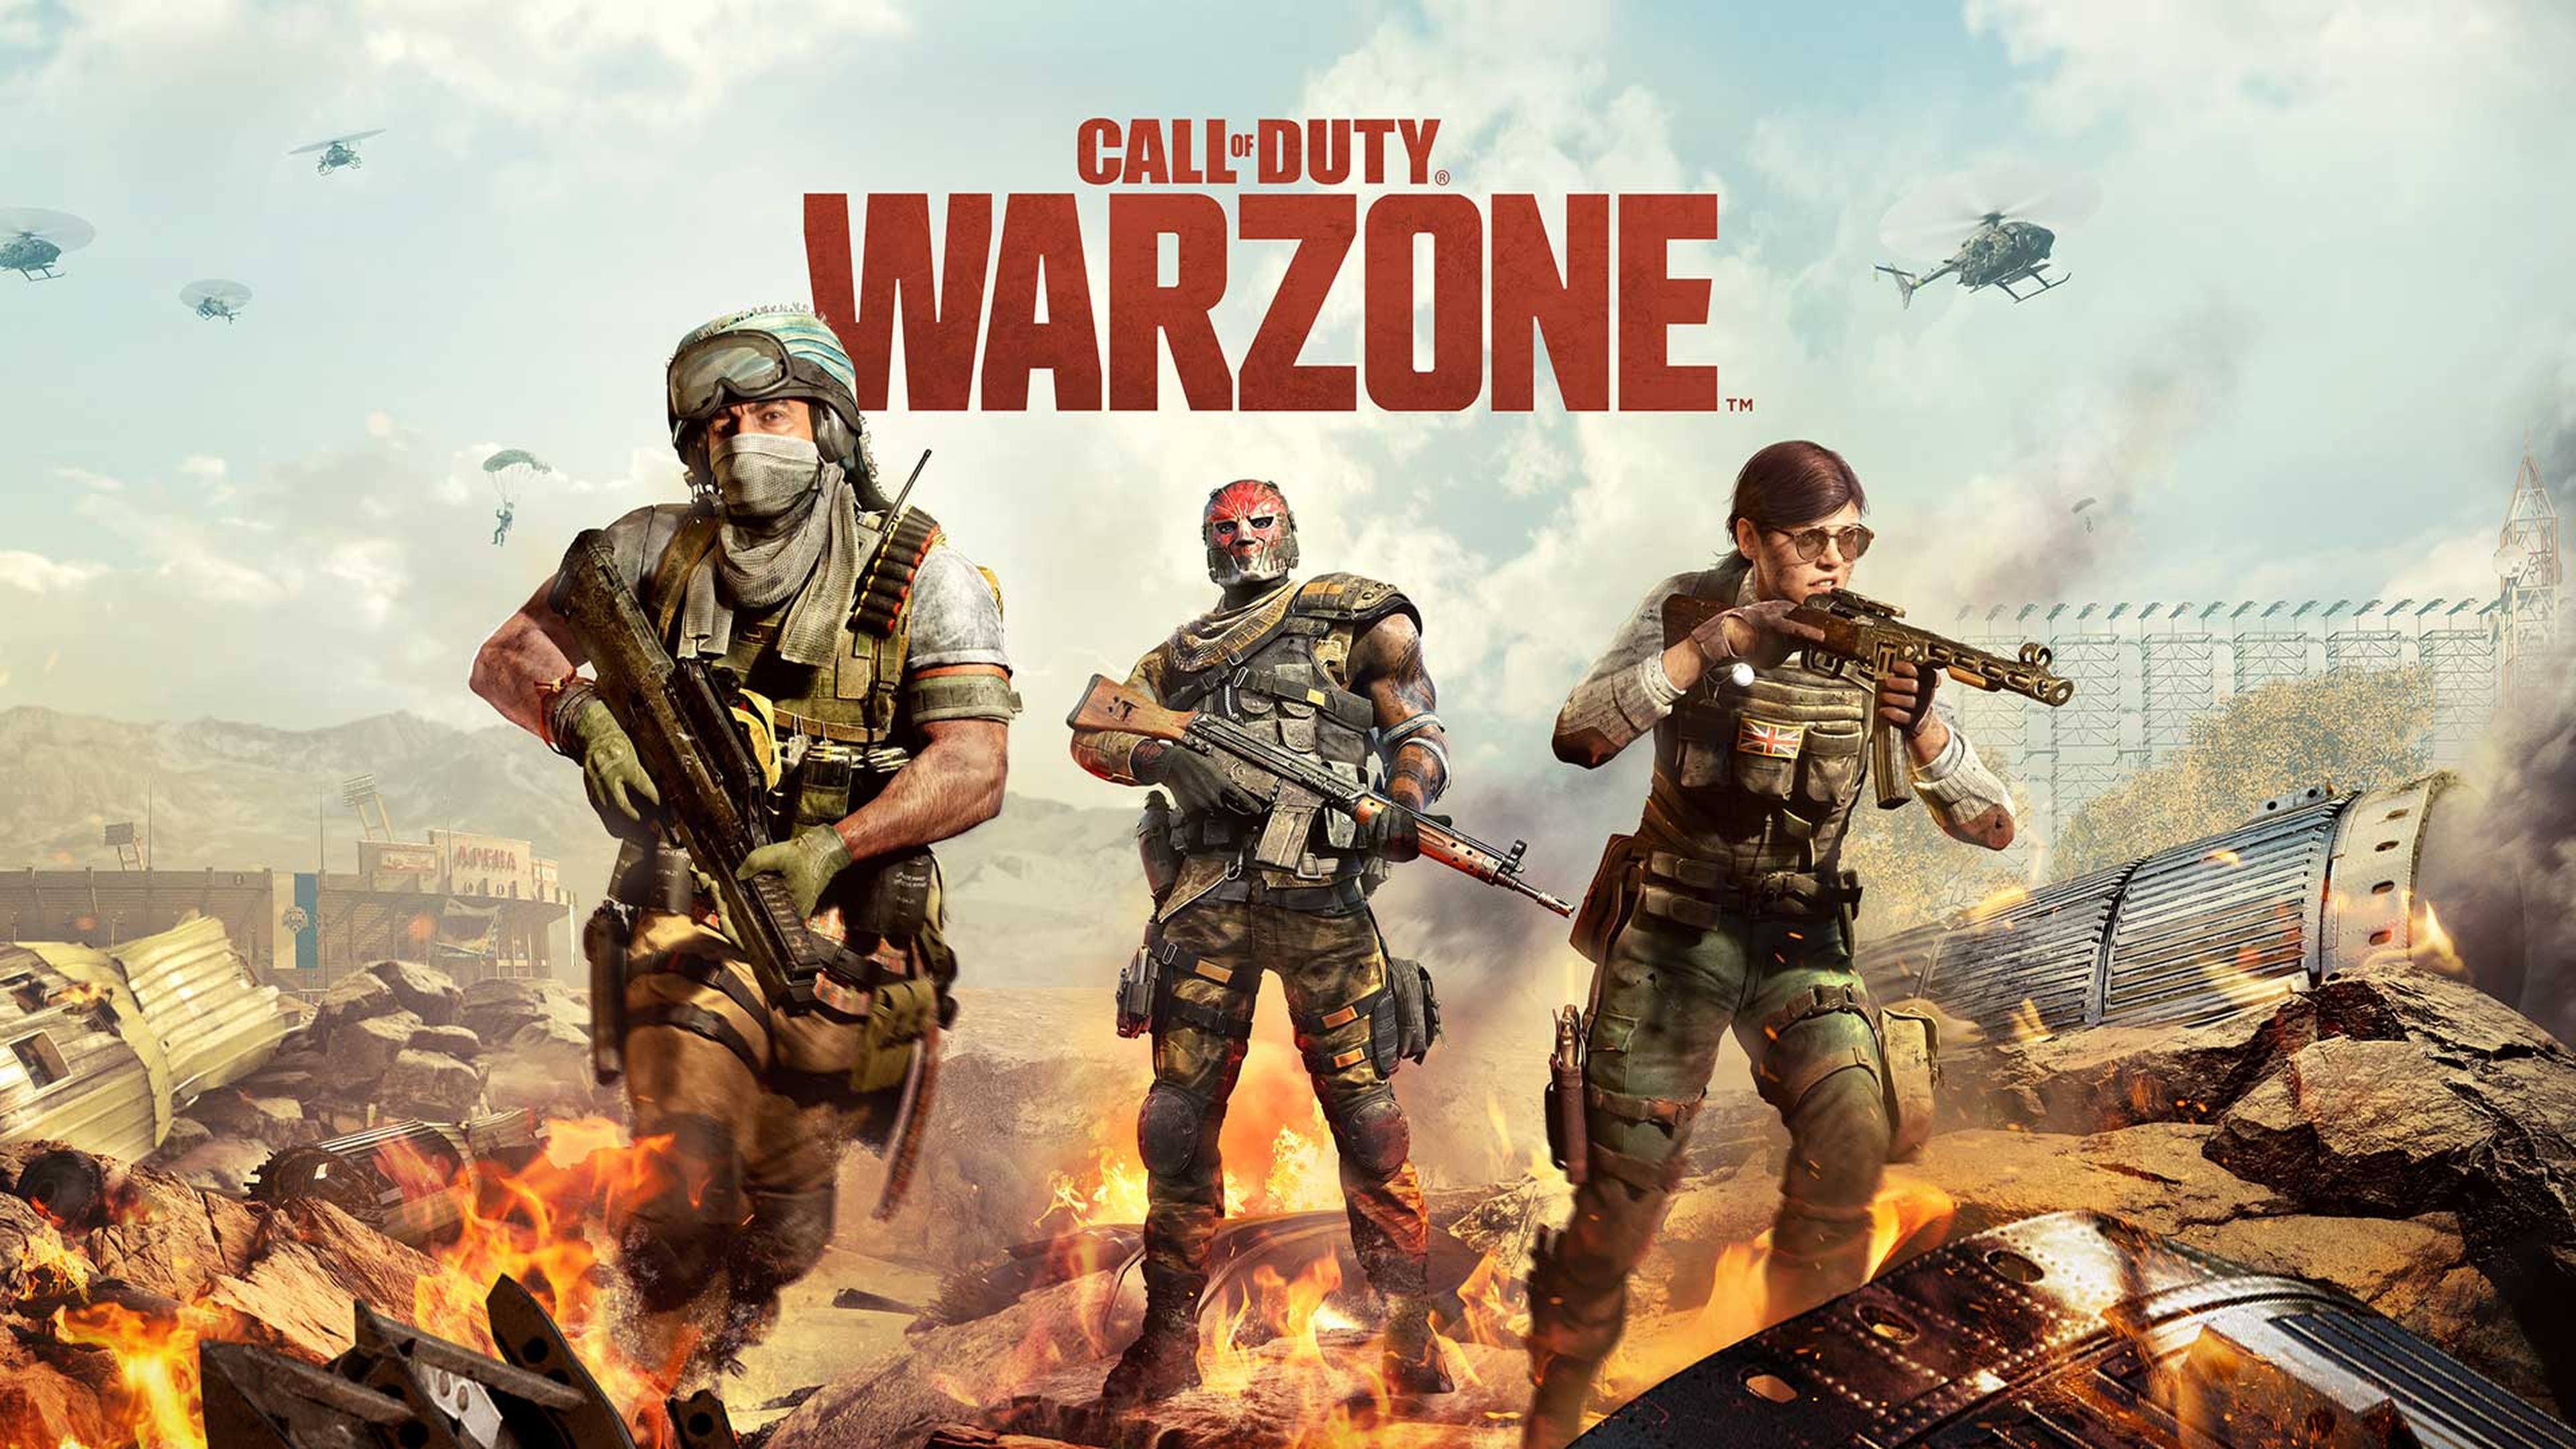 Call of Duty Warzone season 4